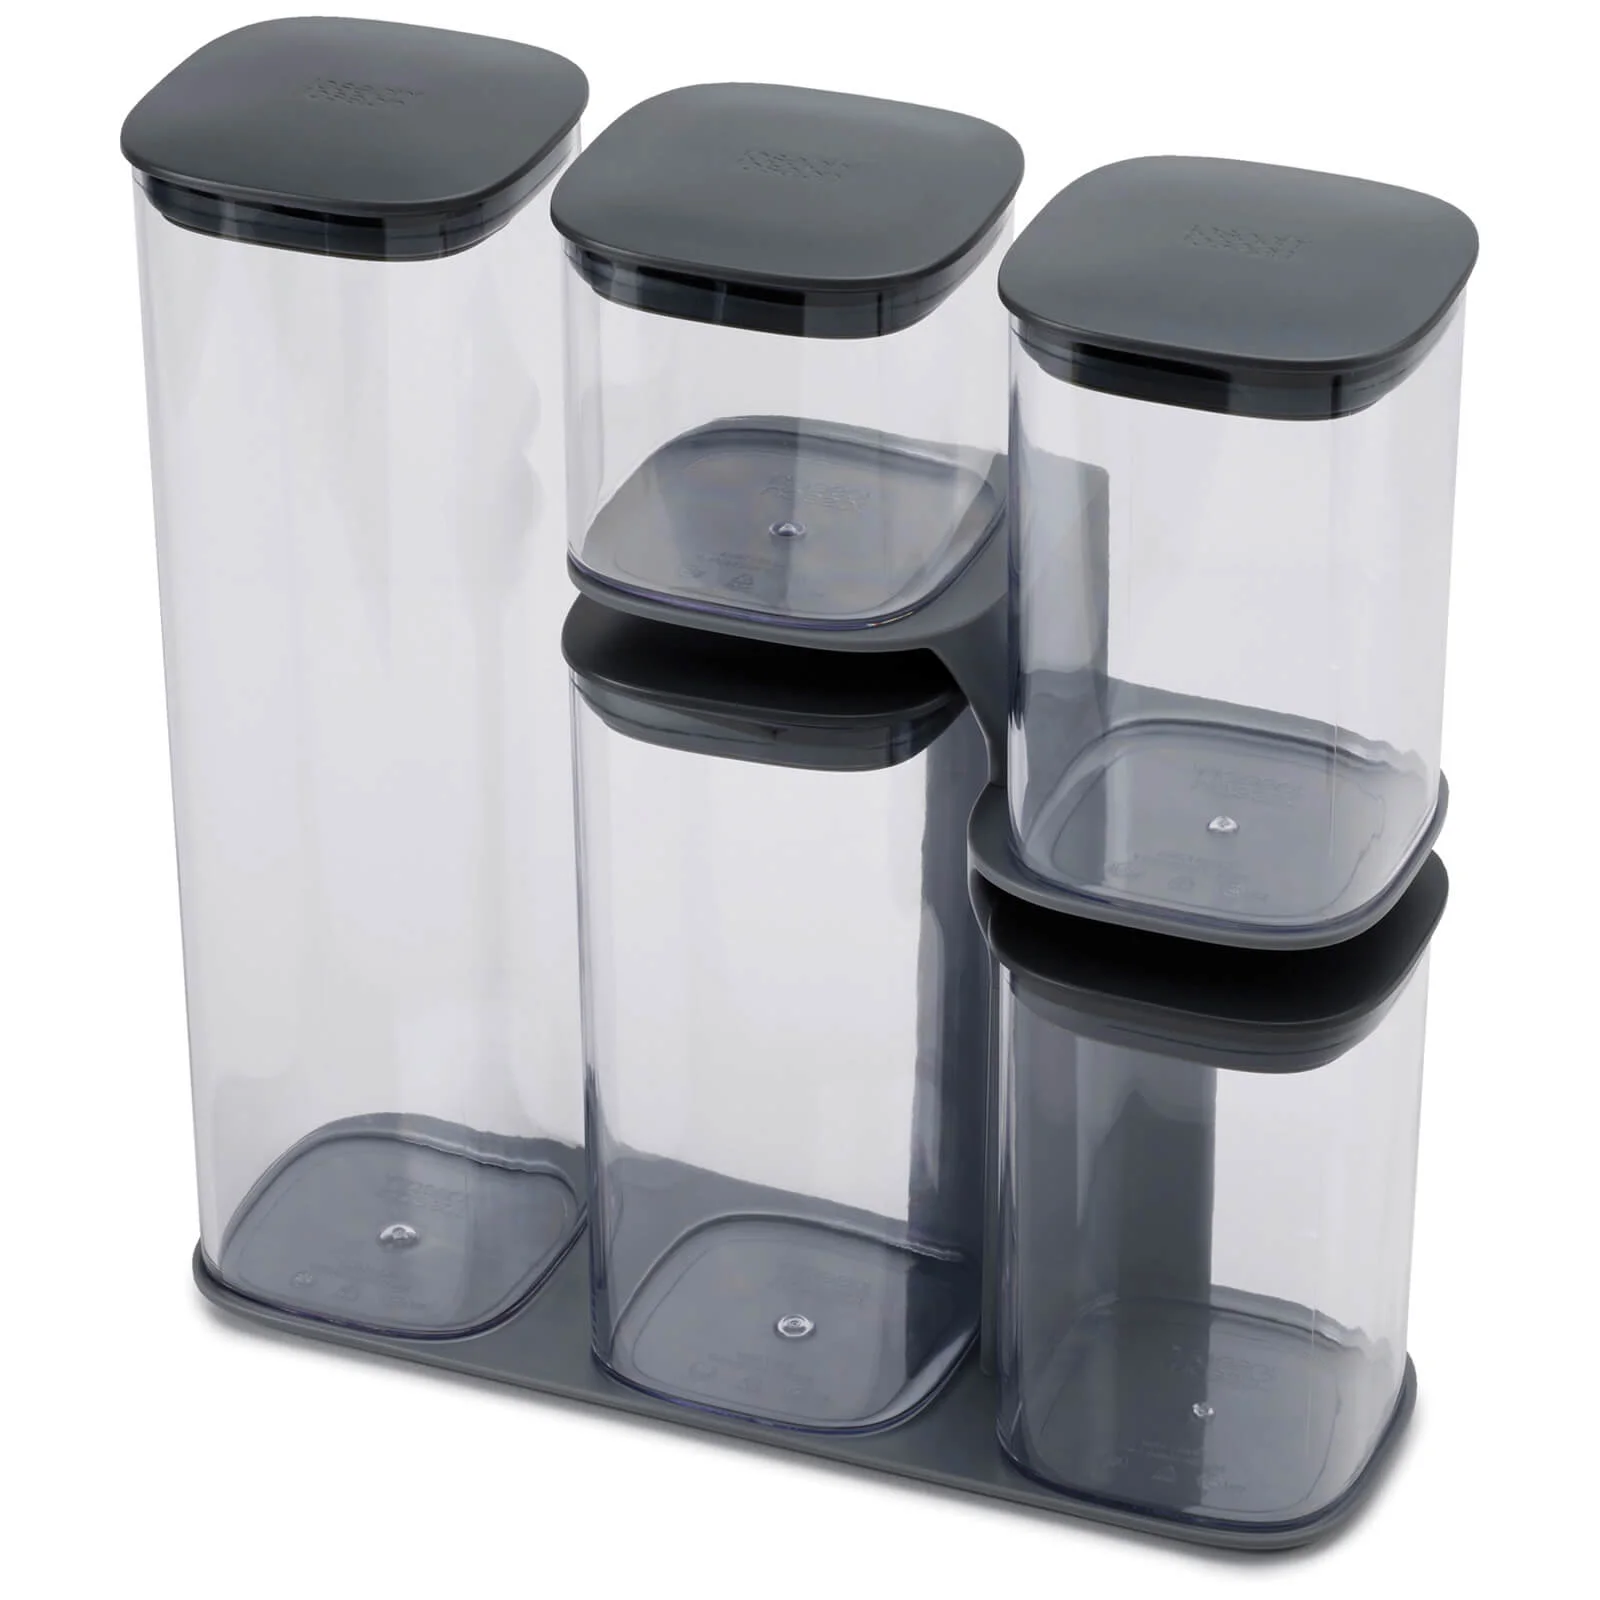 Joseph Joseph Podium 5-Piece Storage Jar Set With Stand - Grey Image 1